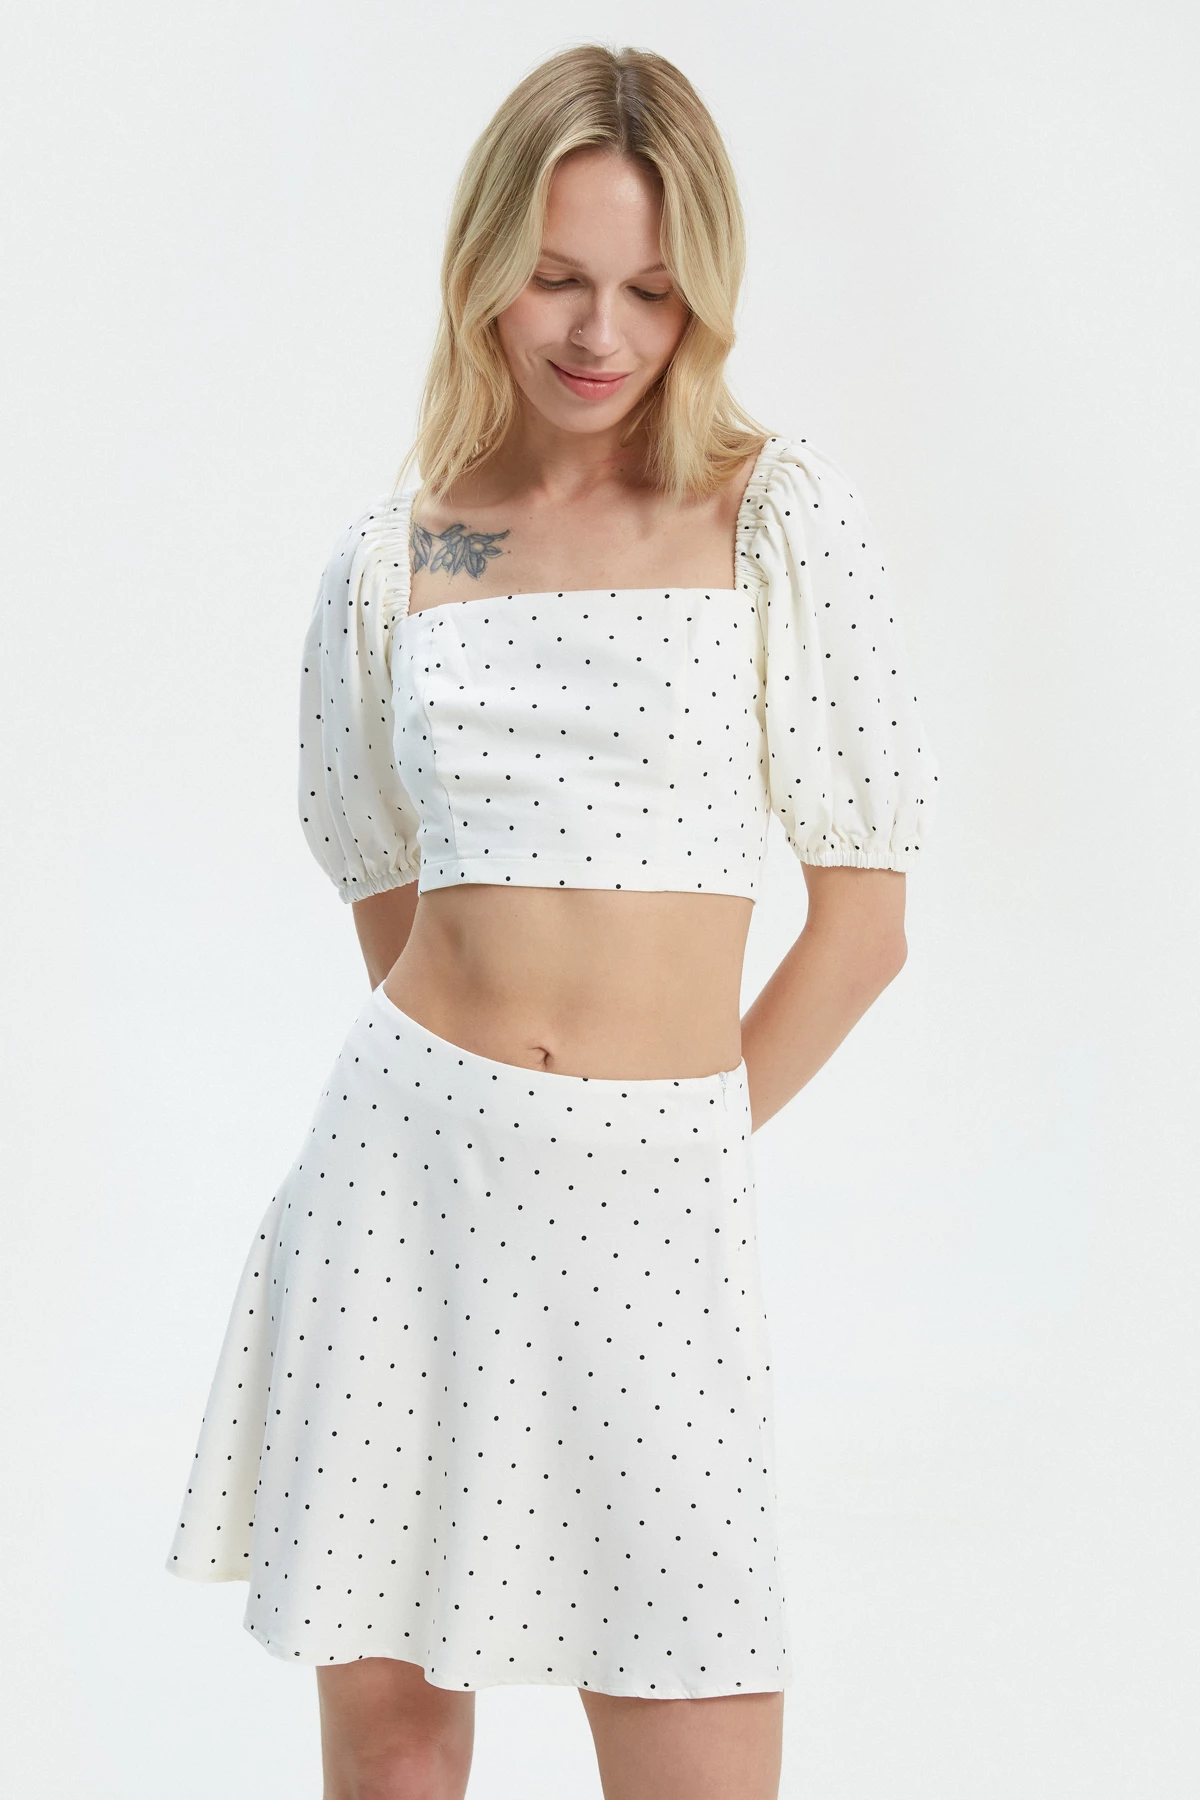 Milky viscose short skirt with polka dot print, photo 1